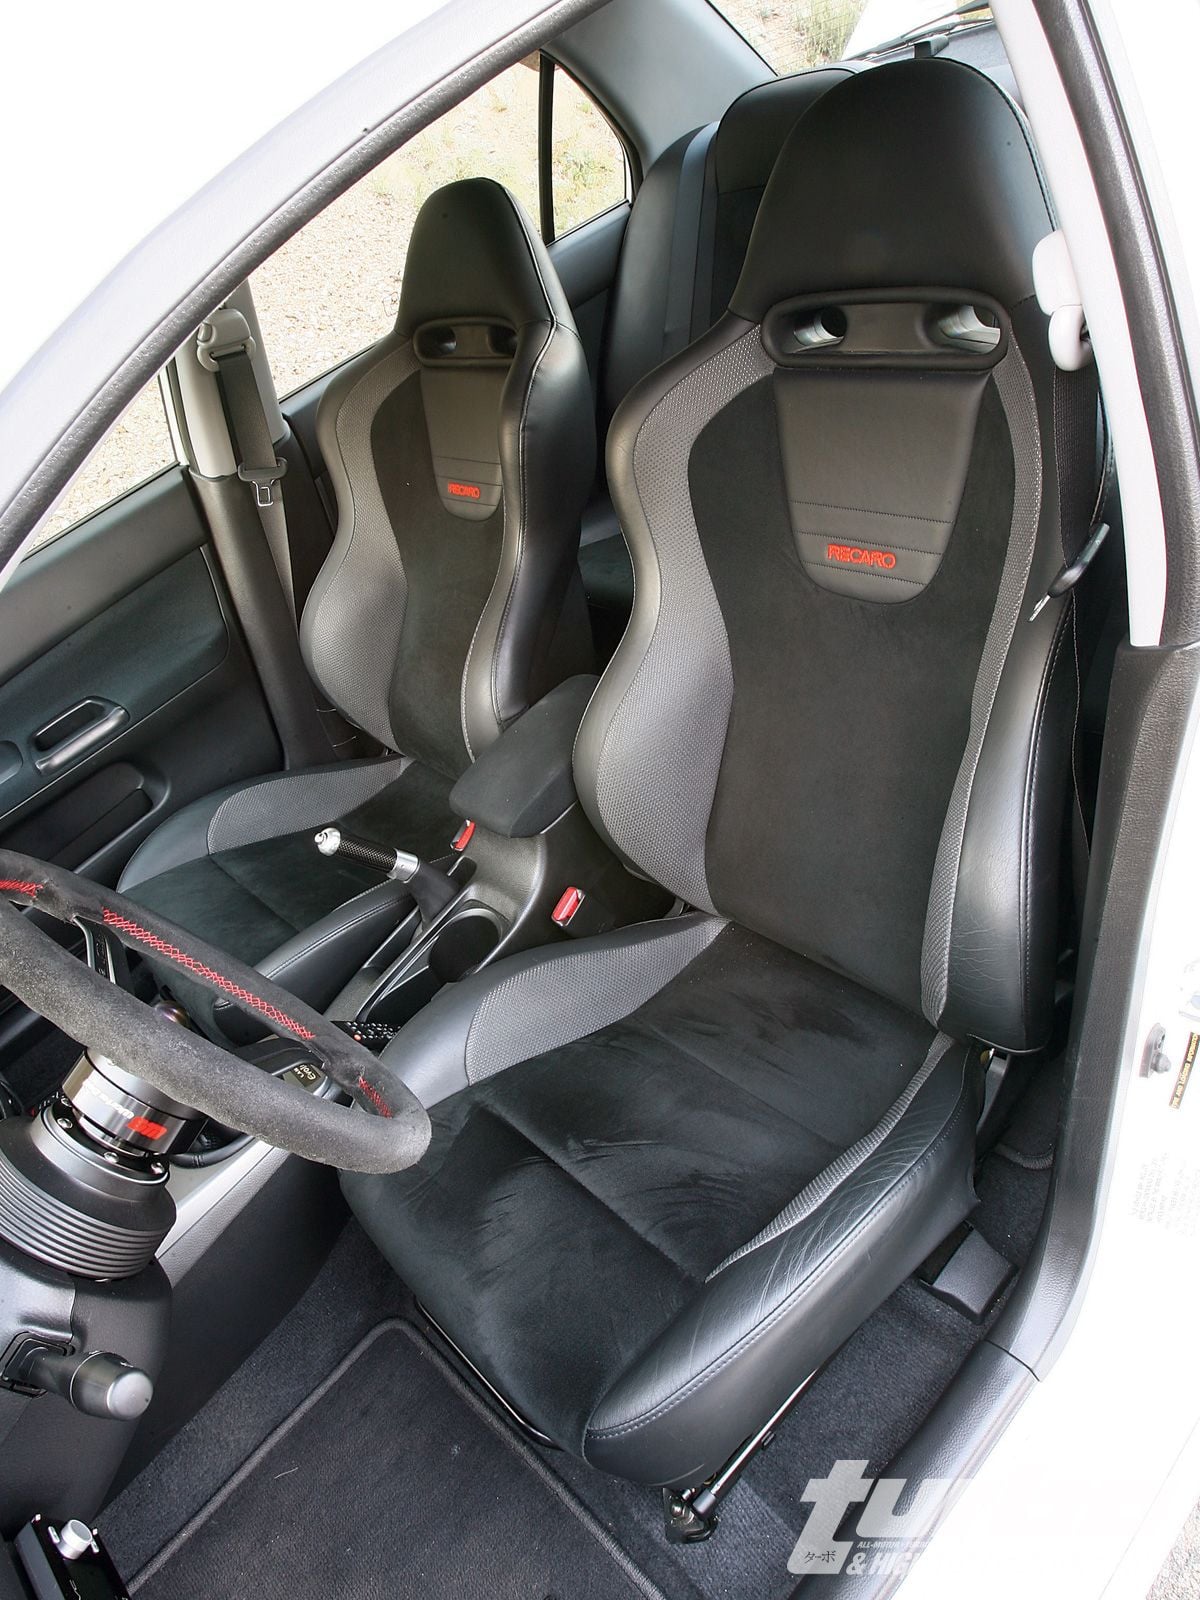 Interior/Upholstery - WTB: Recaro Black/Grey w/Red Stitch Seats (GSR?) - New or Used - 2006 Mitsubishi Lancer Evolution - Azusa, CA 91702, United States